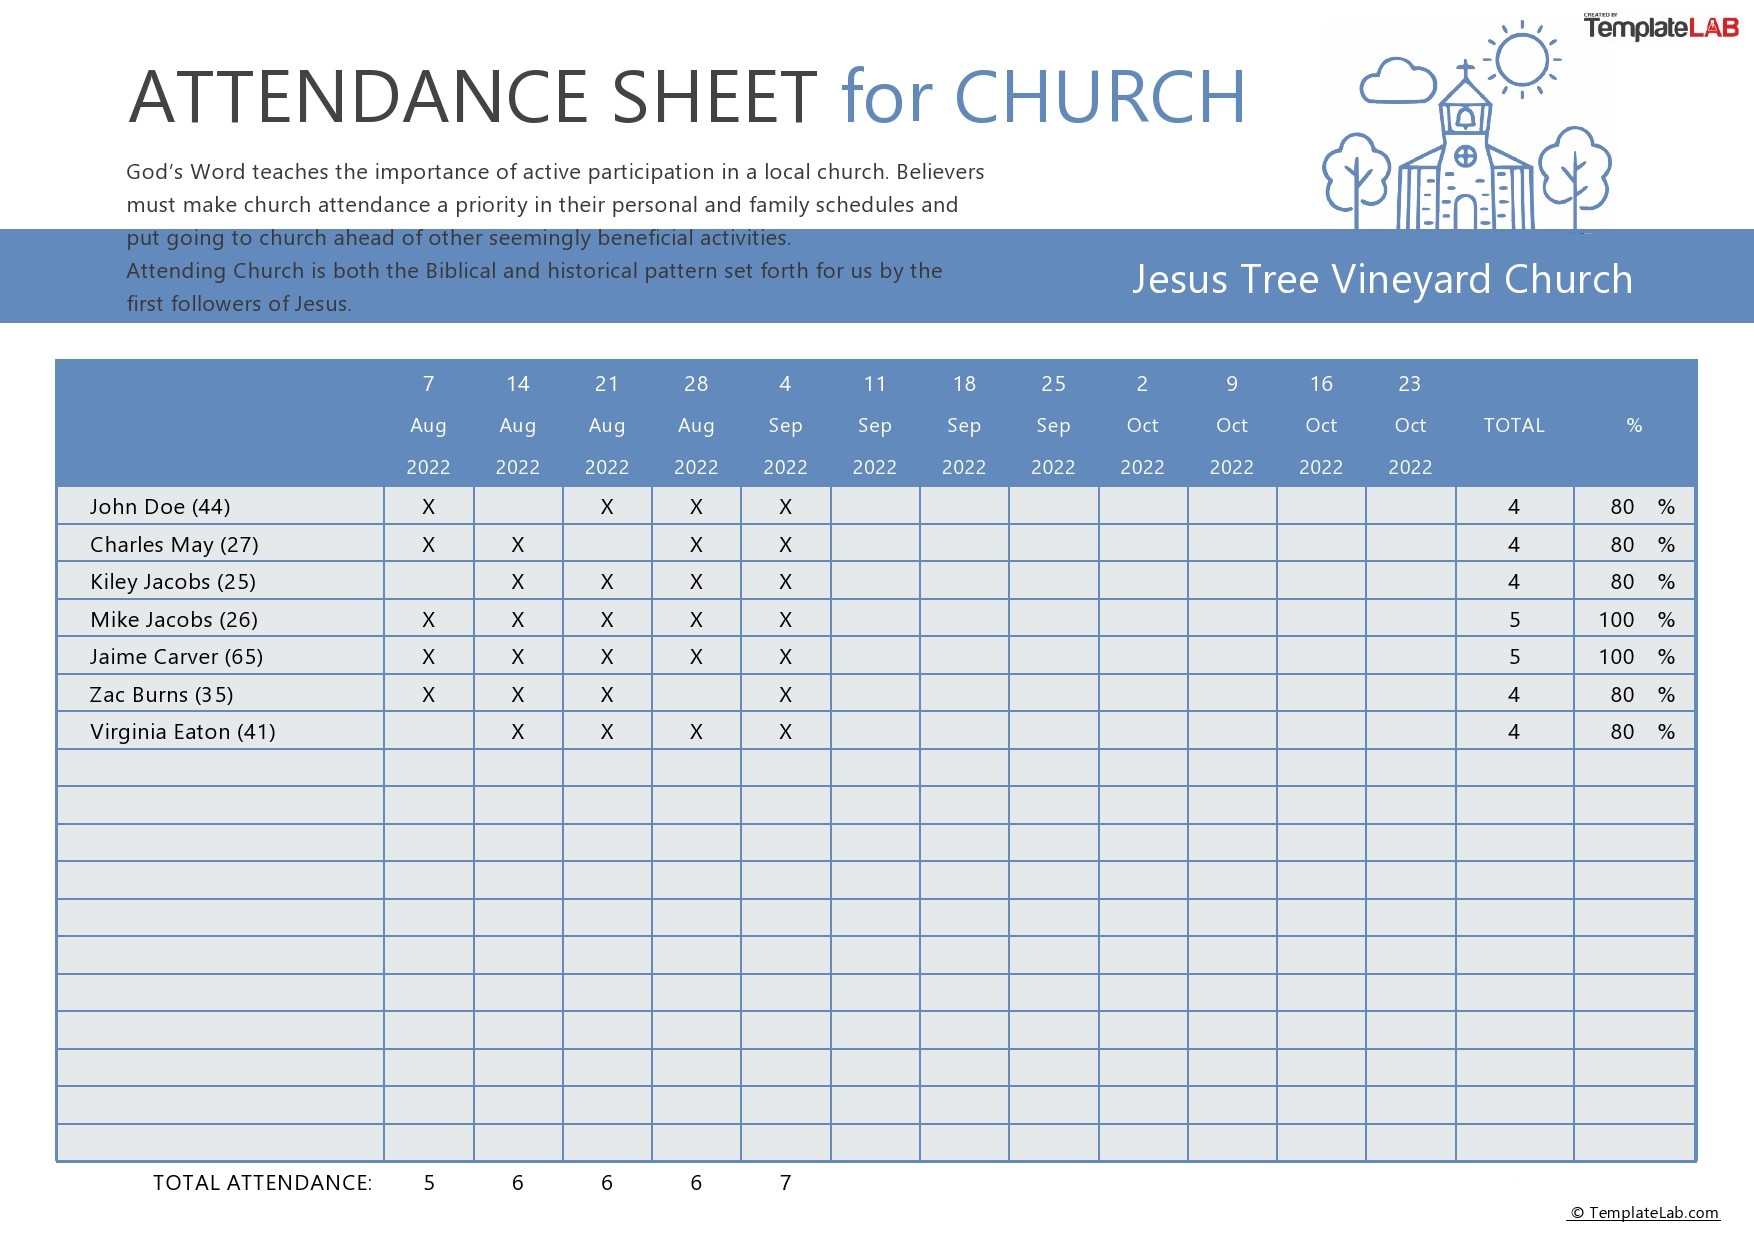 Free Attendance Sheet for Church Template